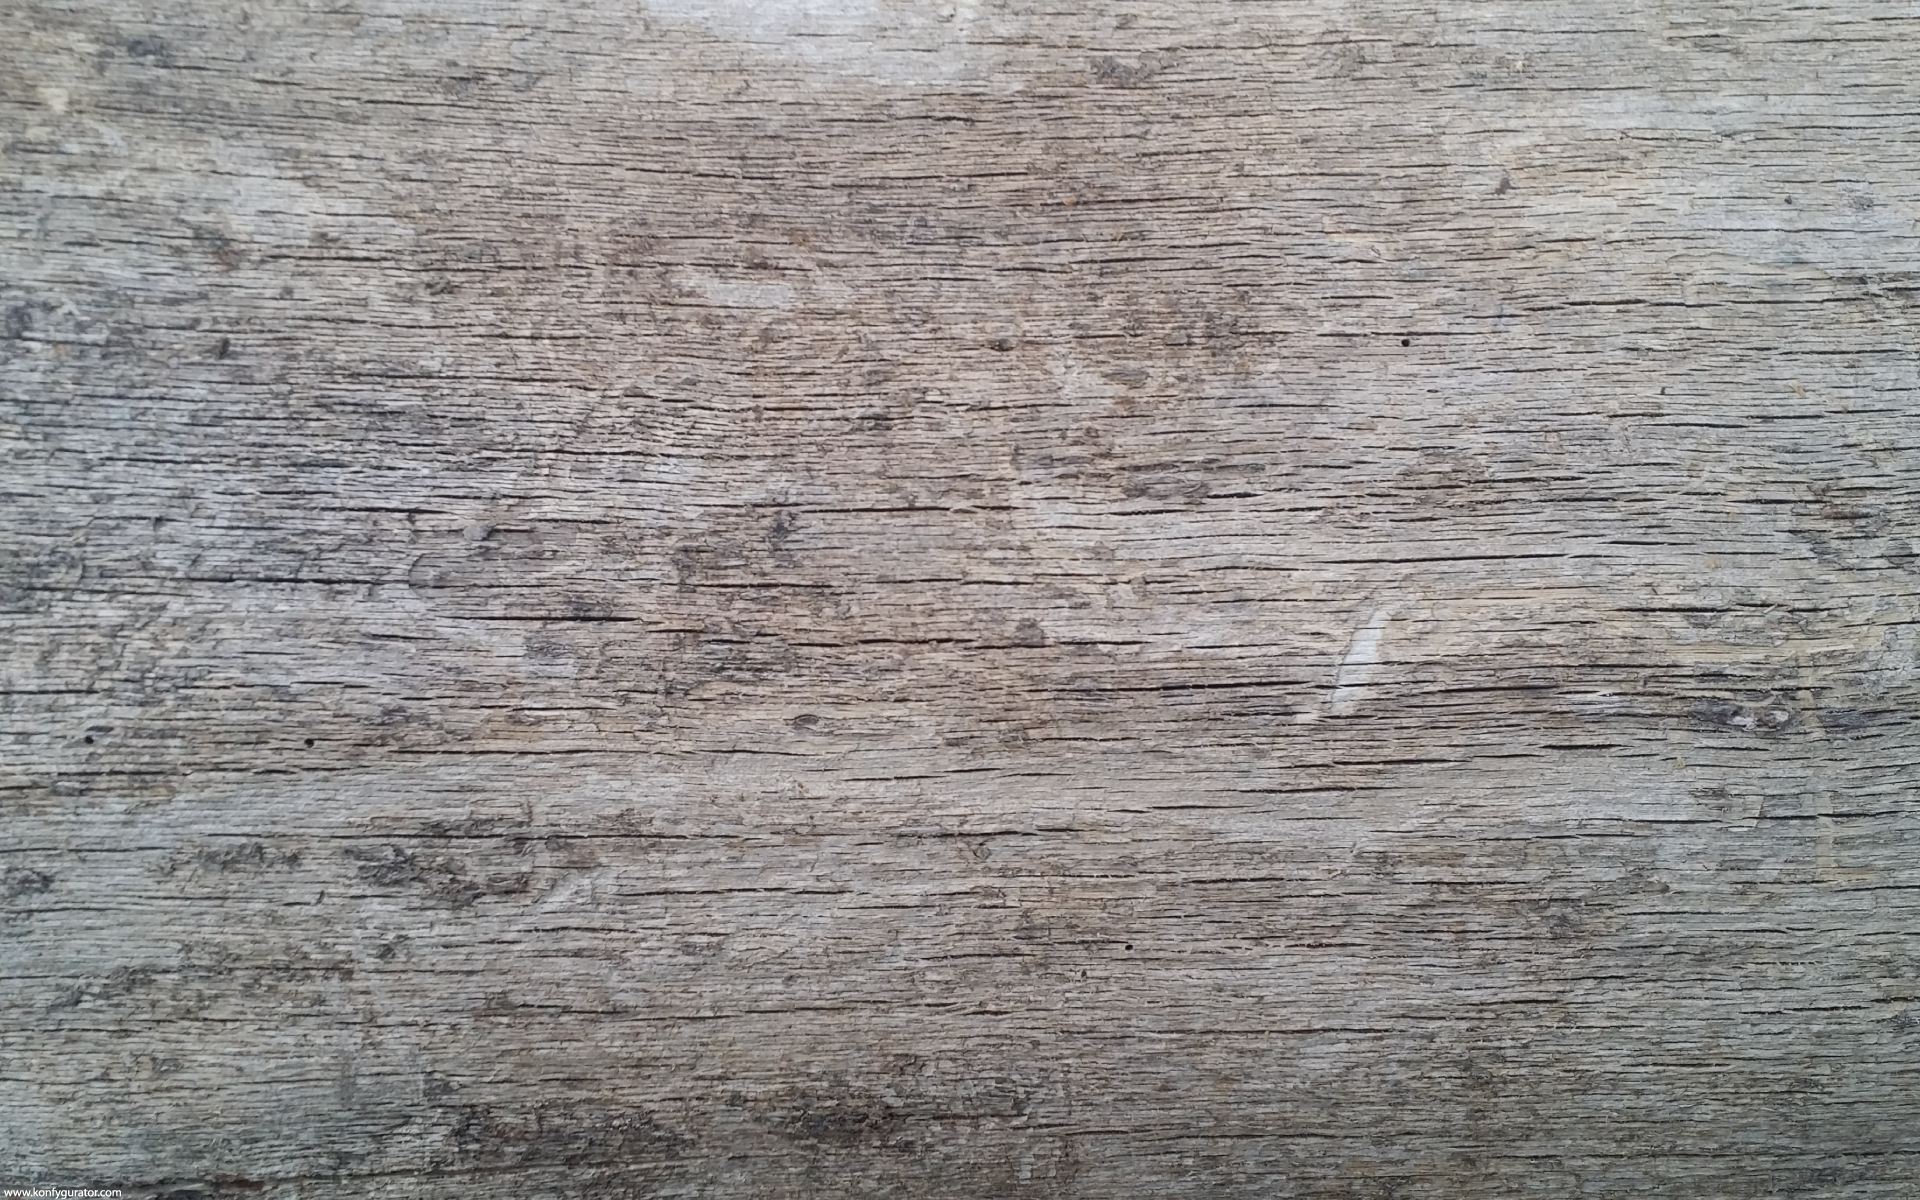 HD Wallpapers - Textures - horizontal, gray, wood